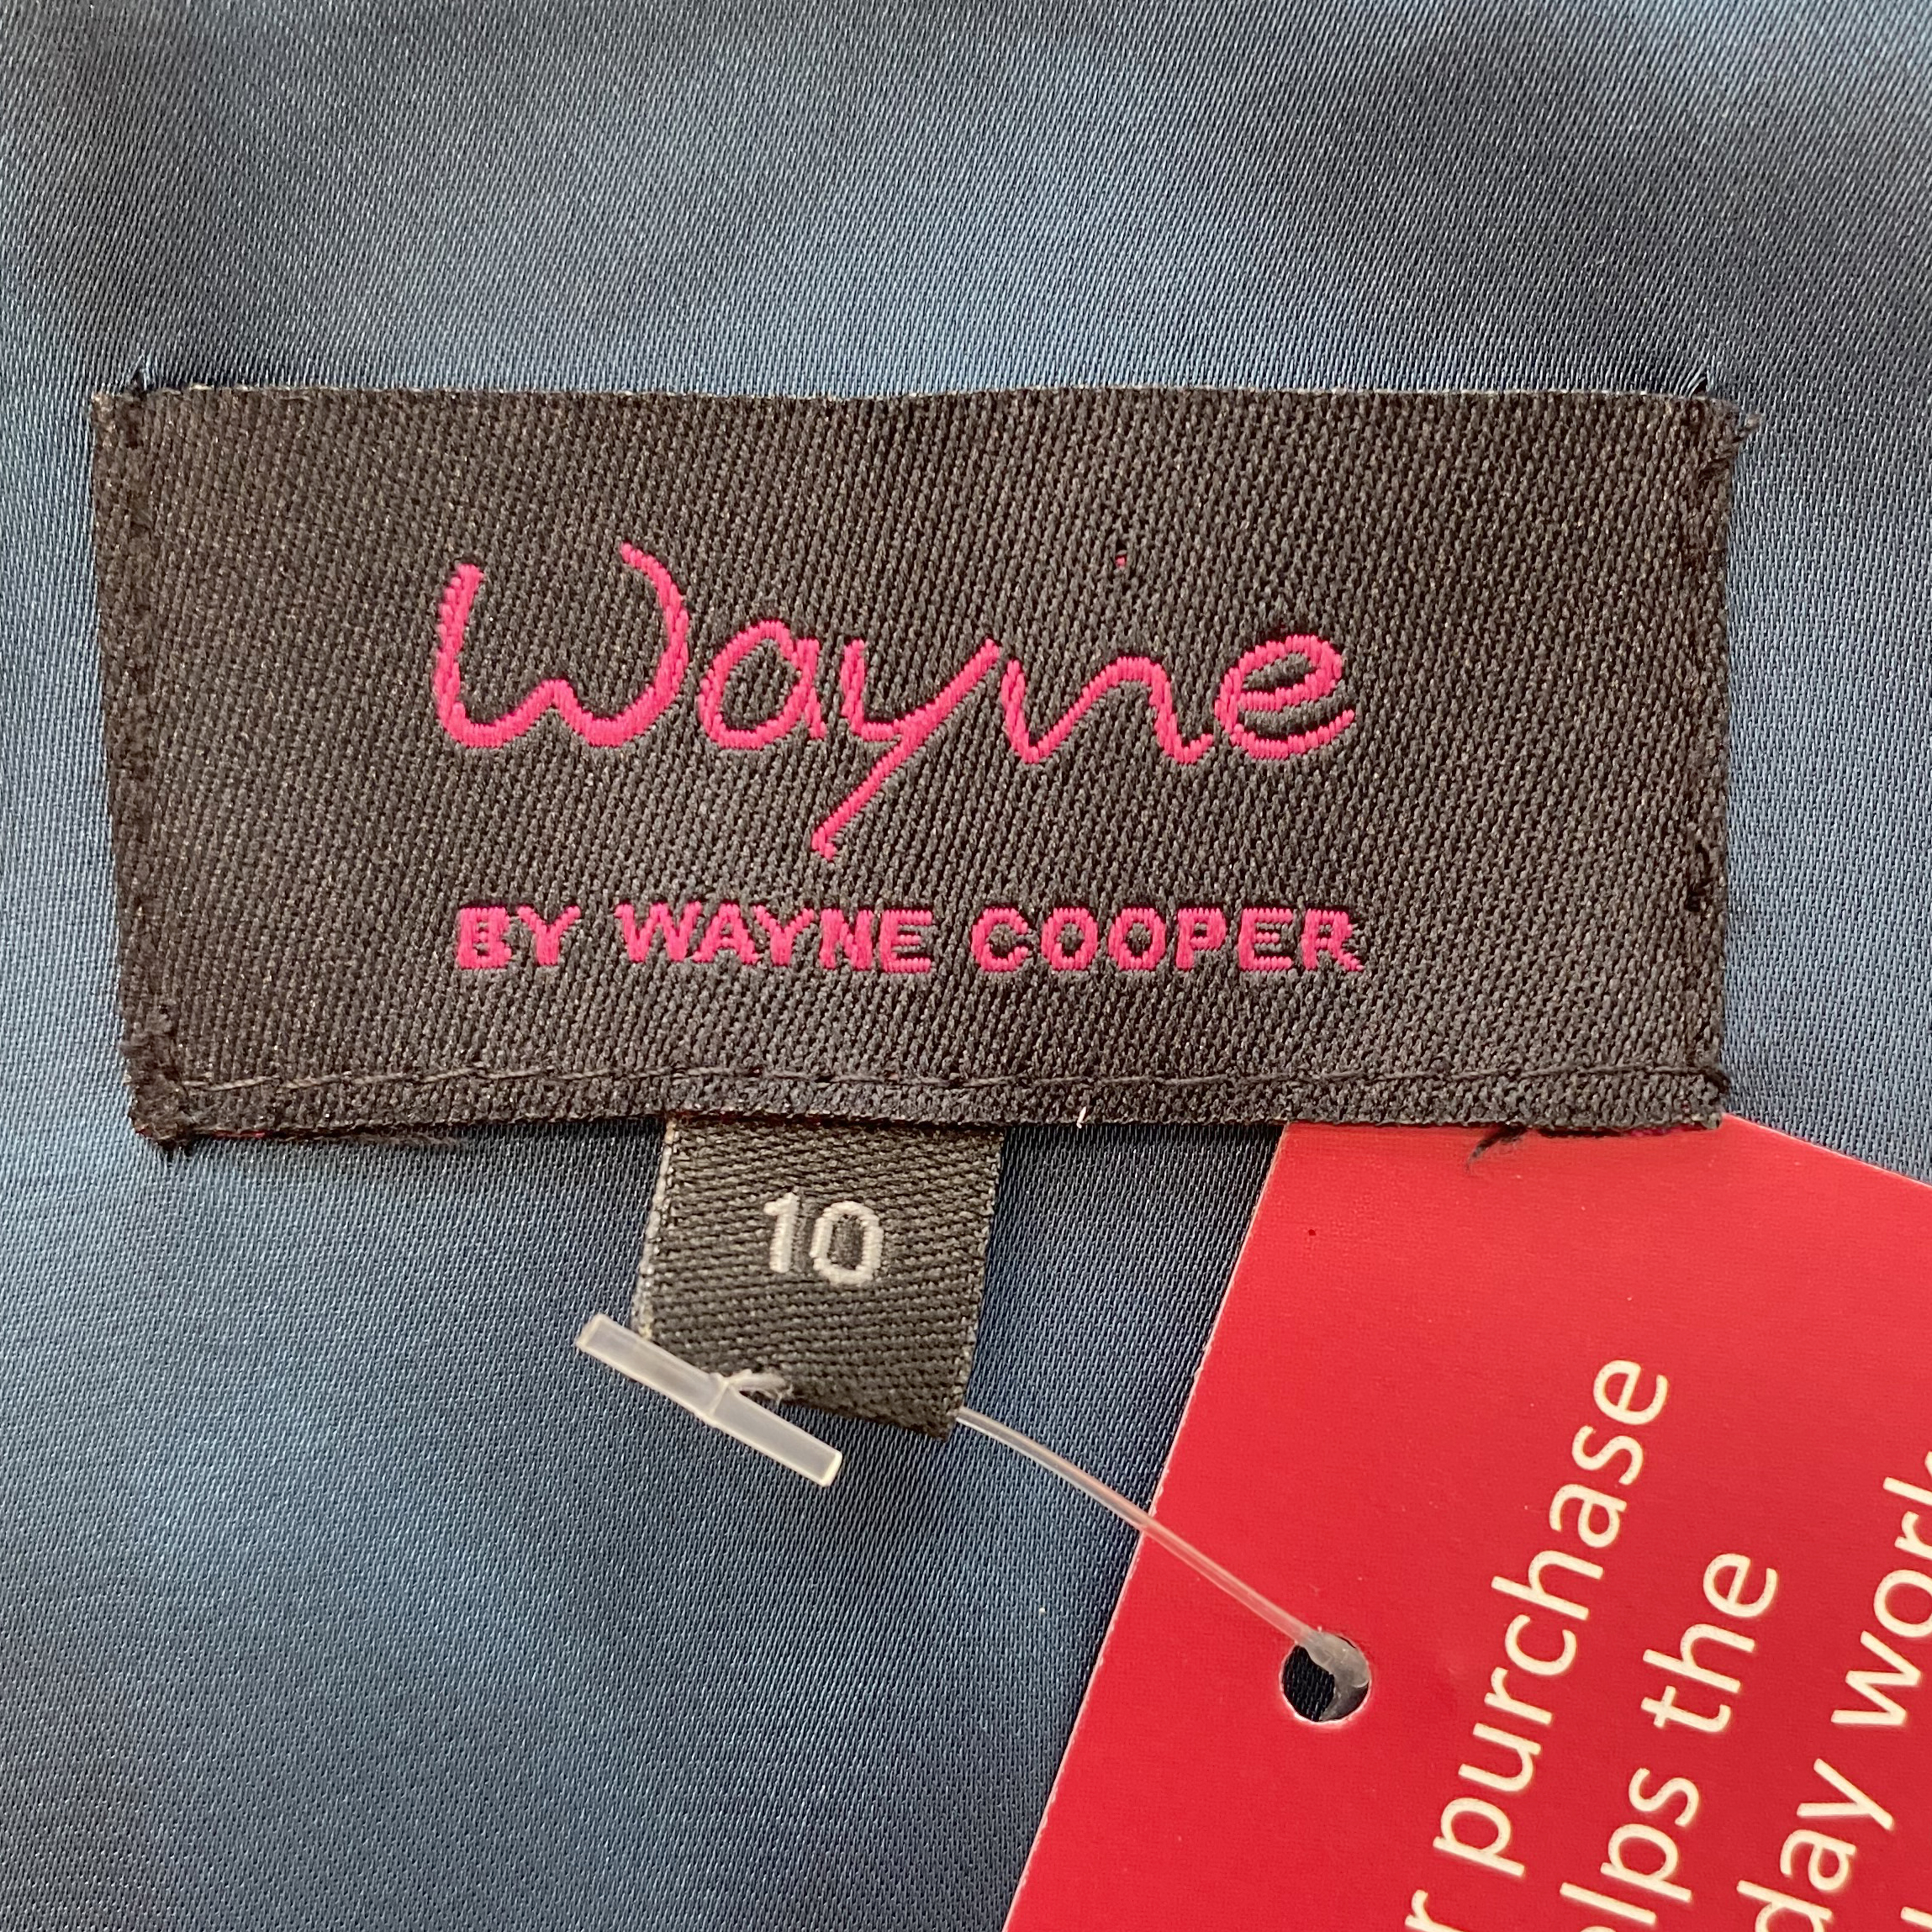 Wayne Cooper Orange & Deep Teal Flowing Mini-Dress